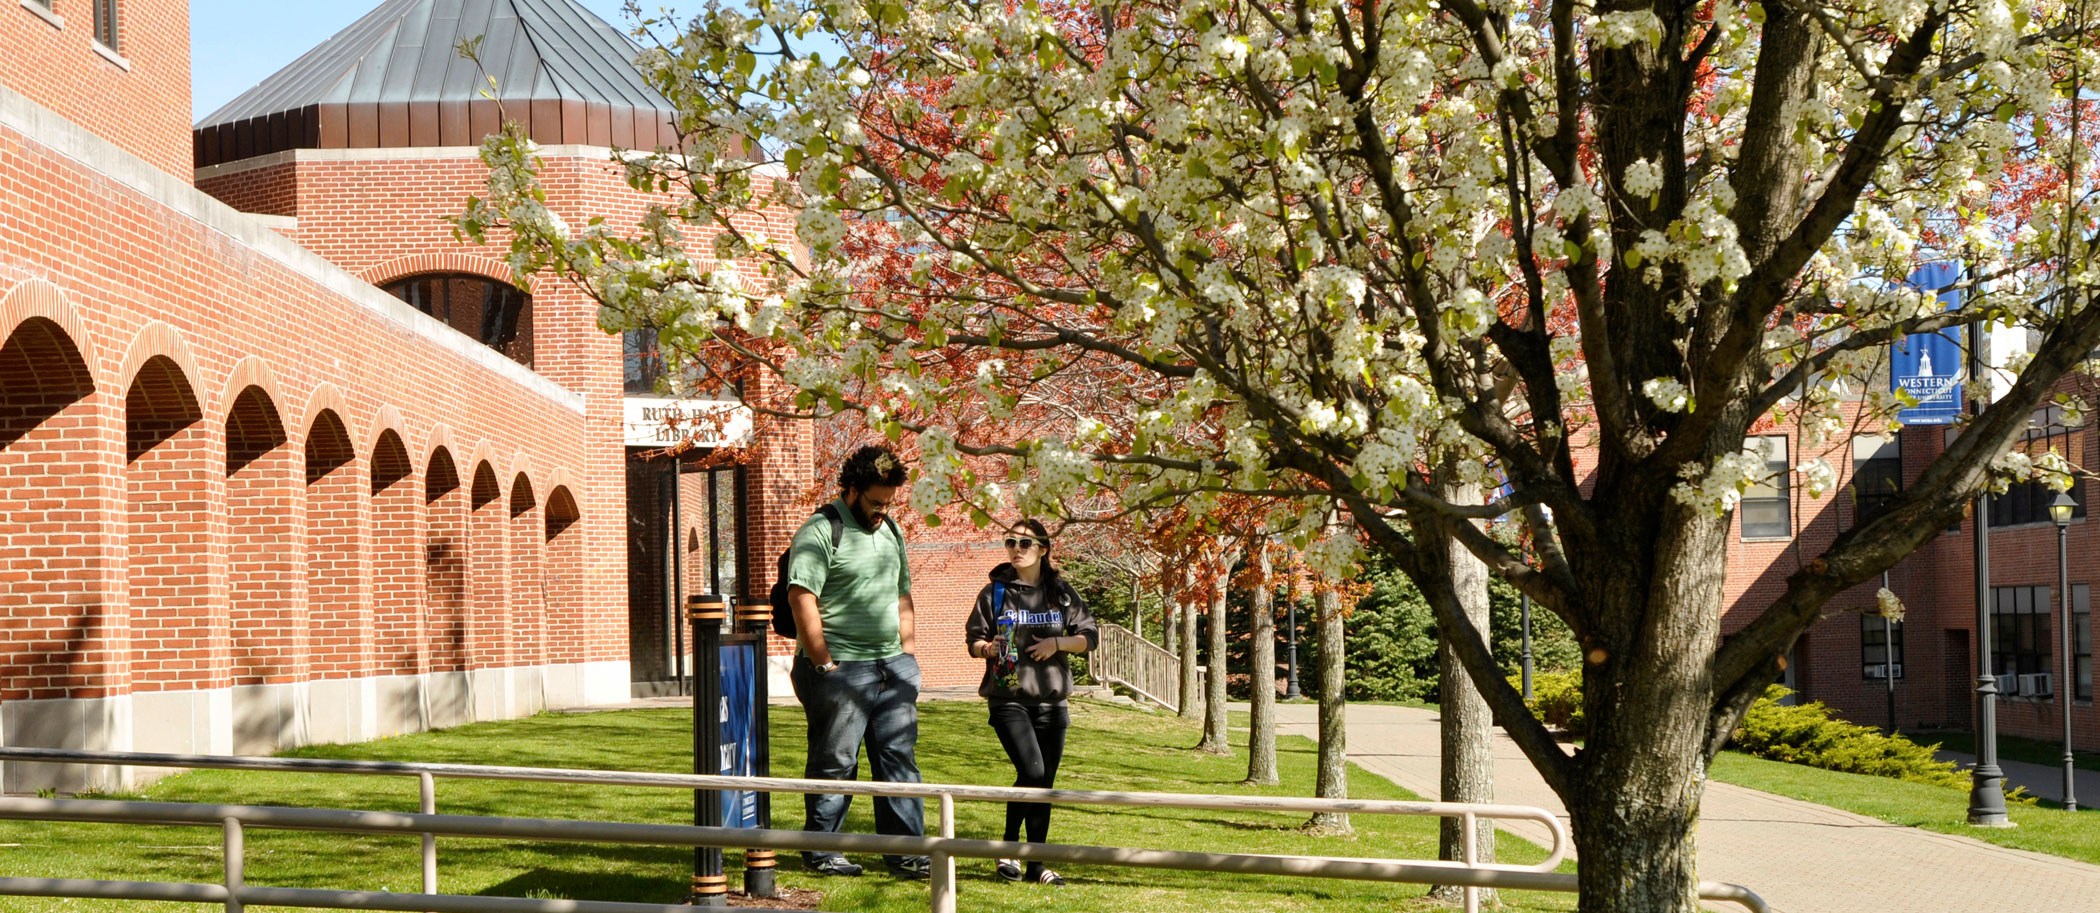 students walking on campus under flowering trees